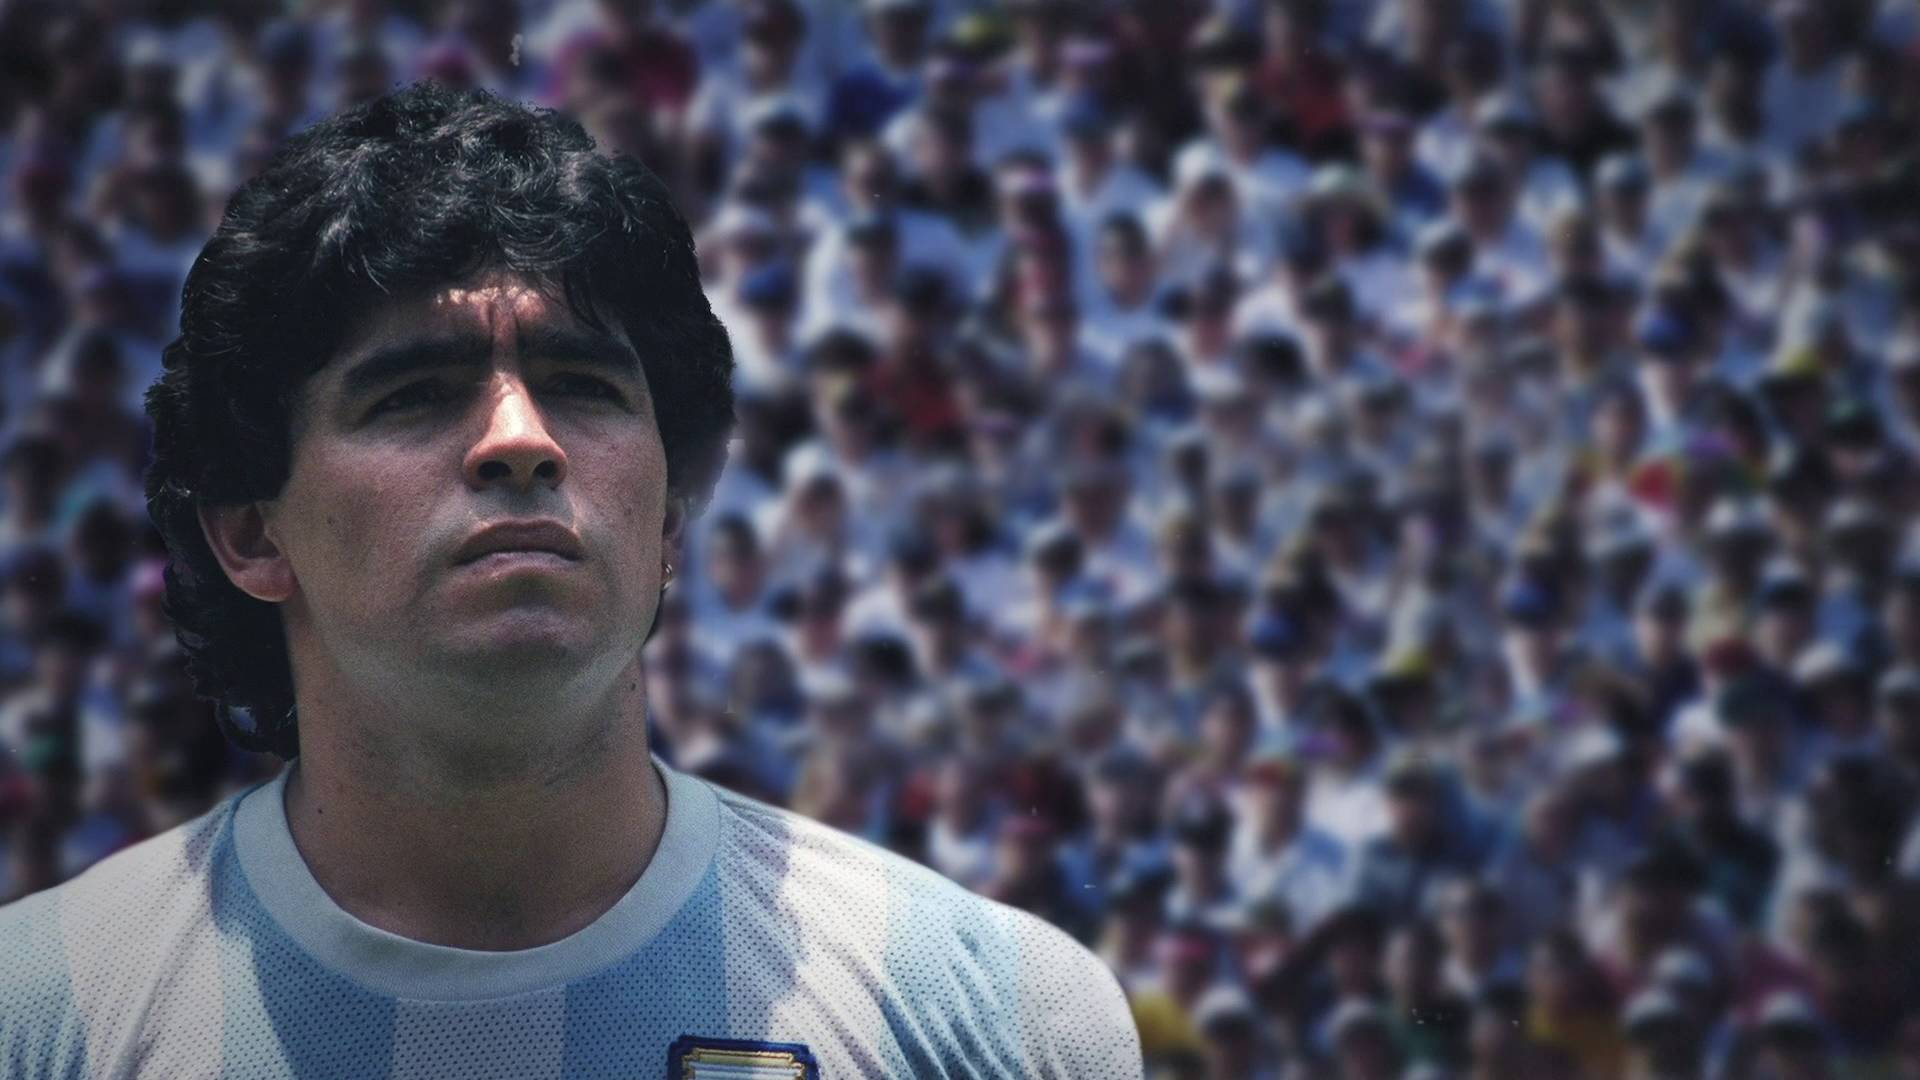 Maradona: The Greatest Ever